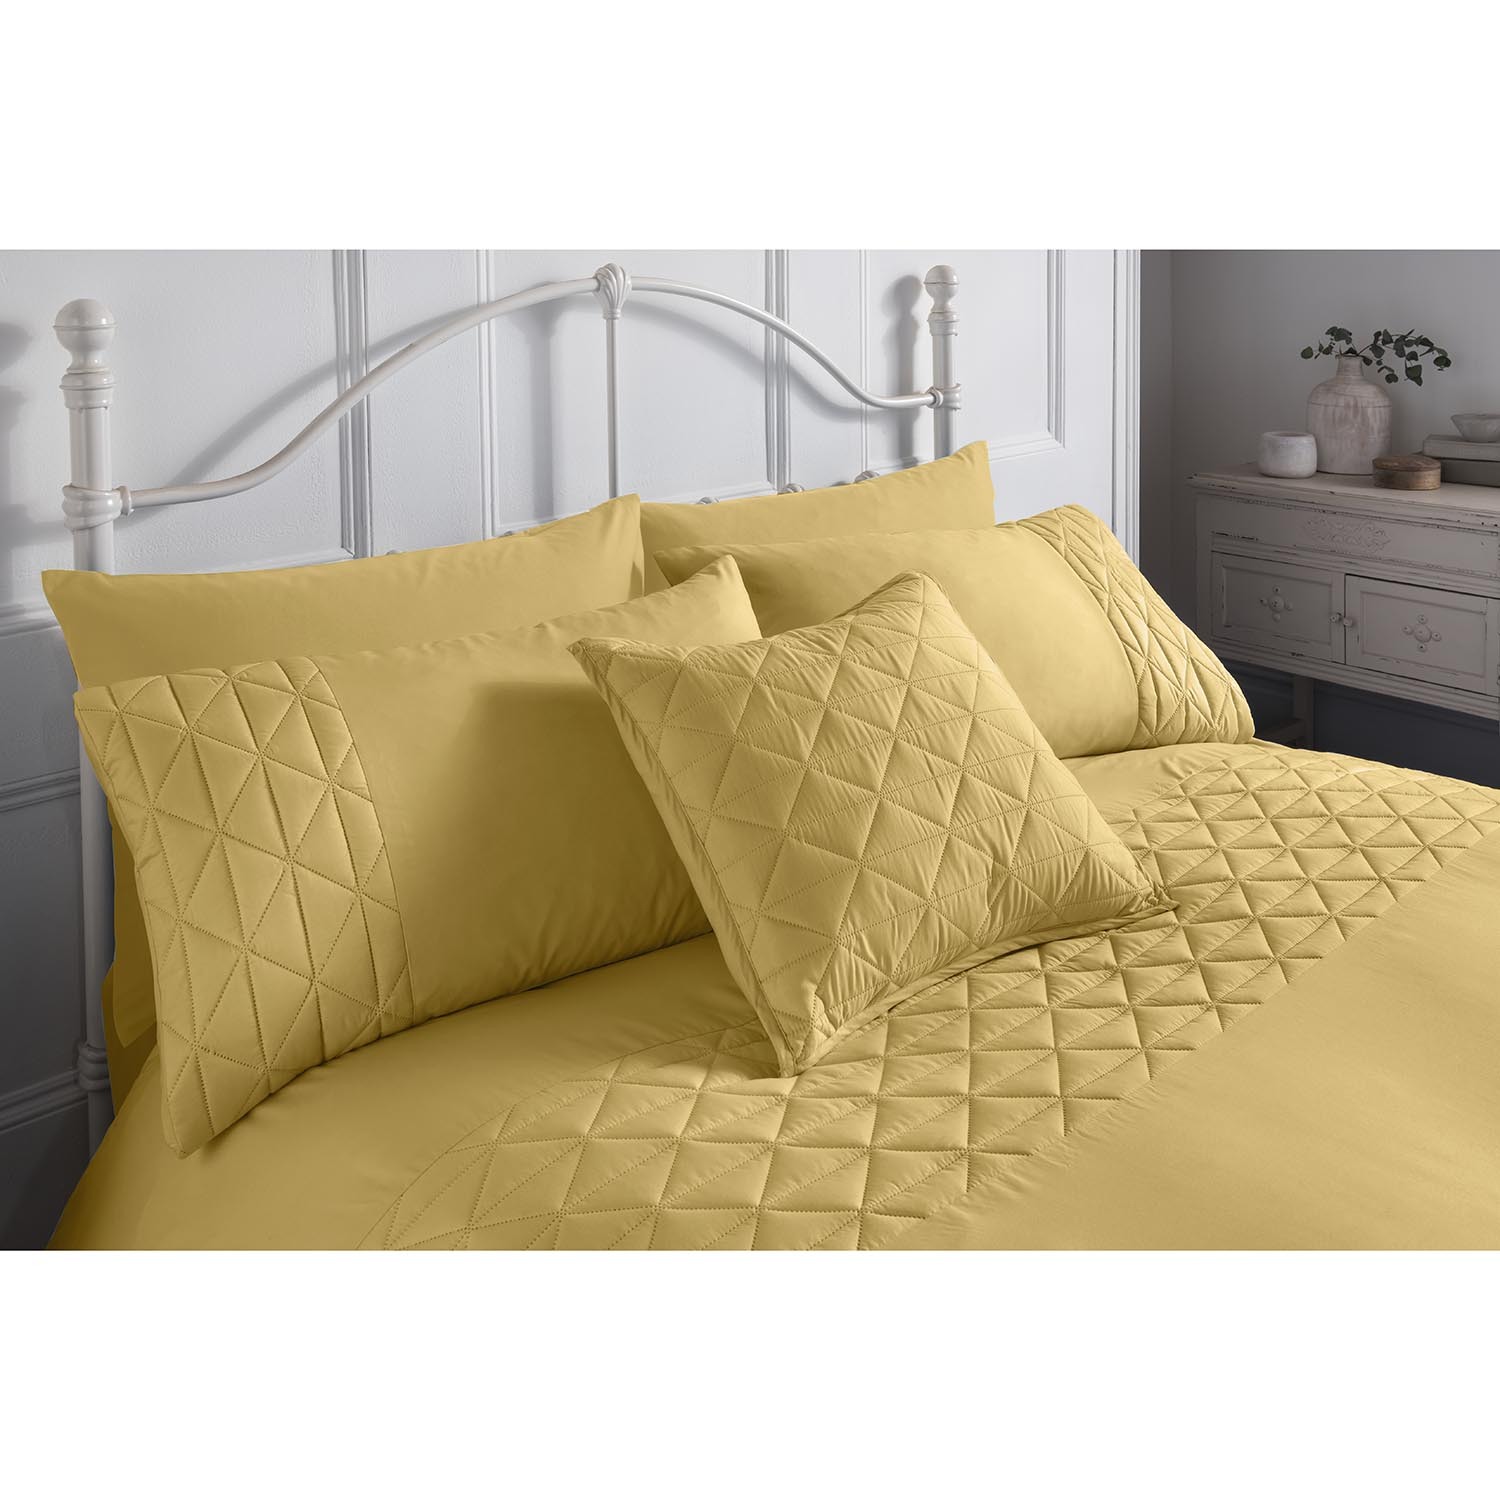 Pinsonic Duvet Cover and Pillowcase Set - Mustard Image 2